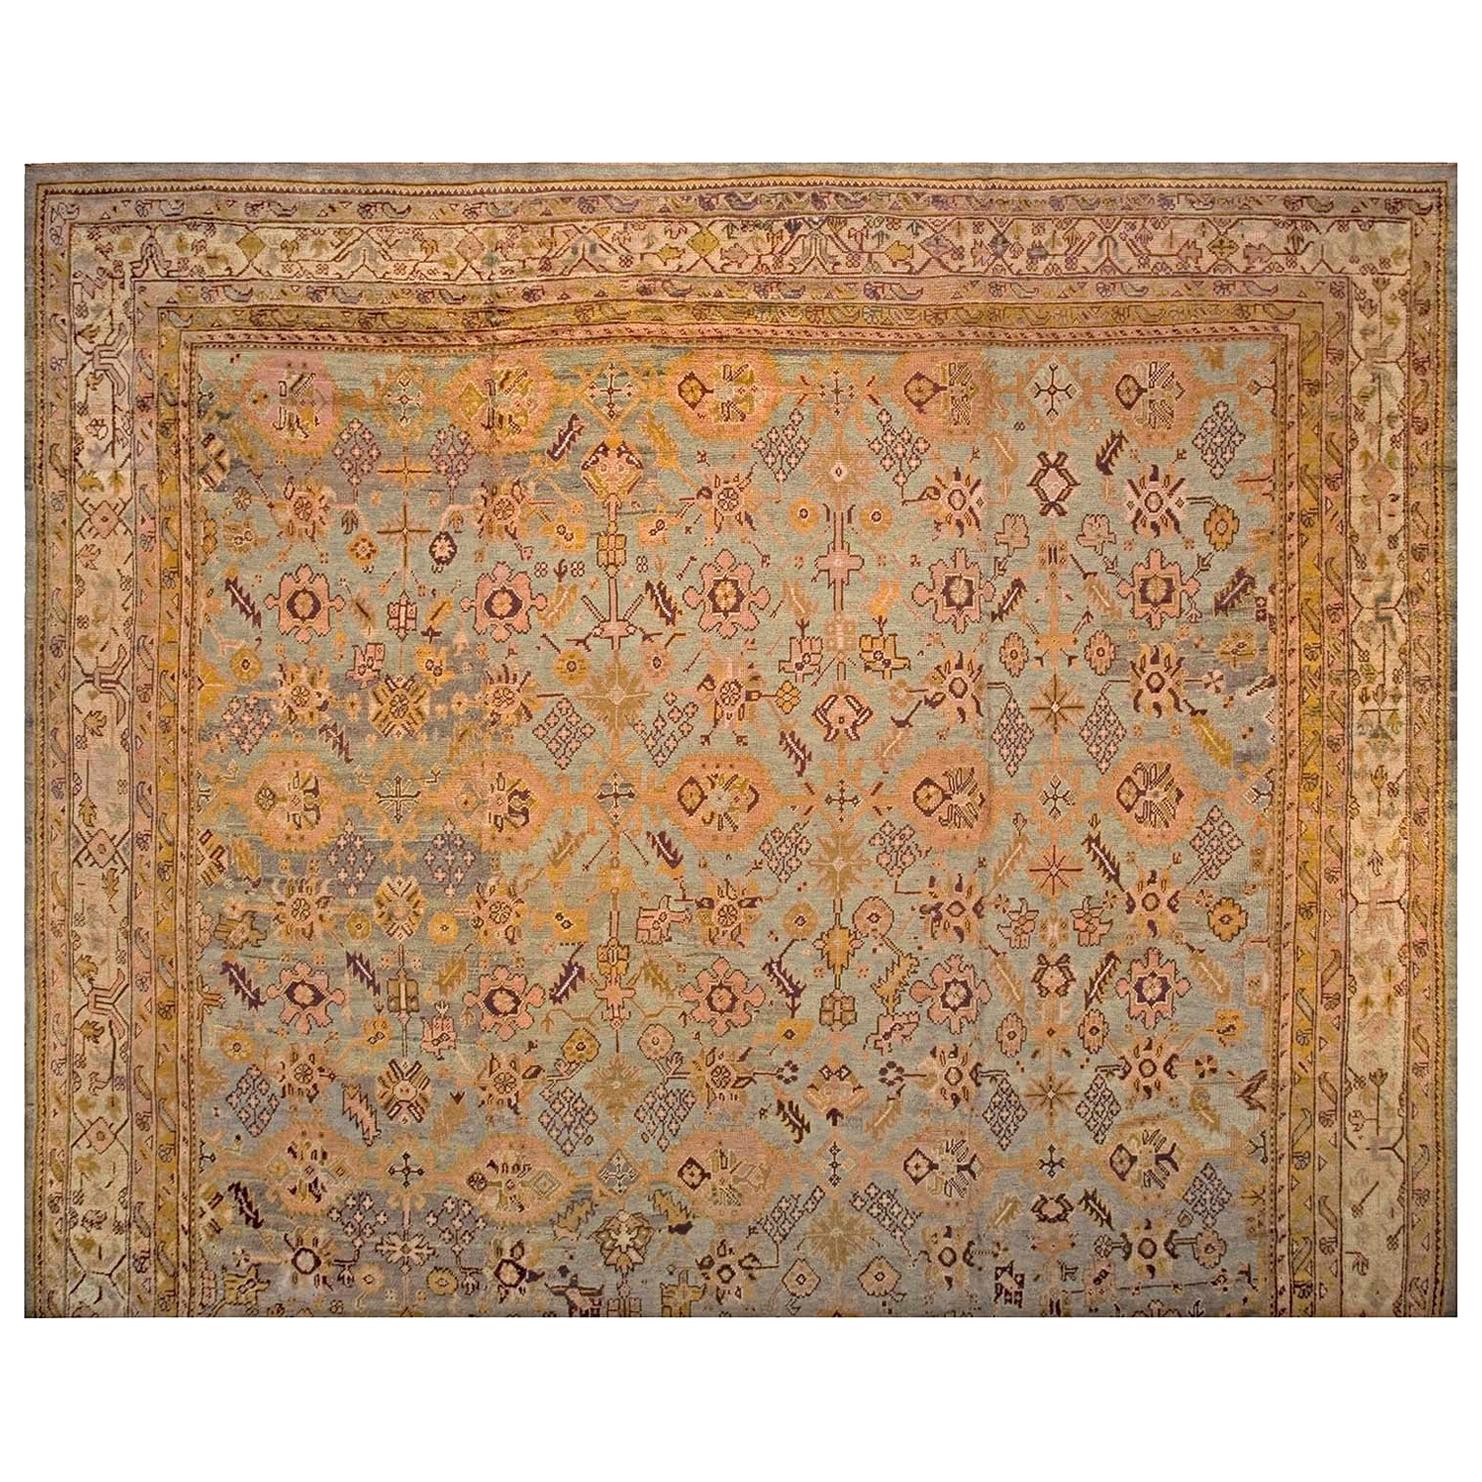 Late 19th Century Turkish Oushak Carpet ( 17'6" x 19'6" - 533 x 594 ) For Sale